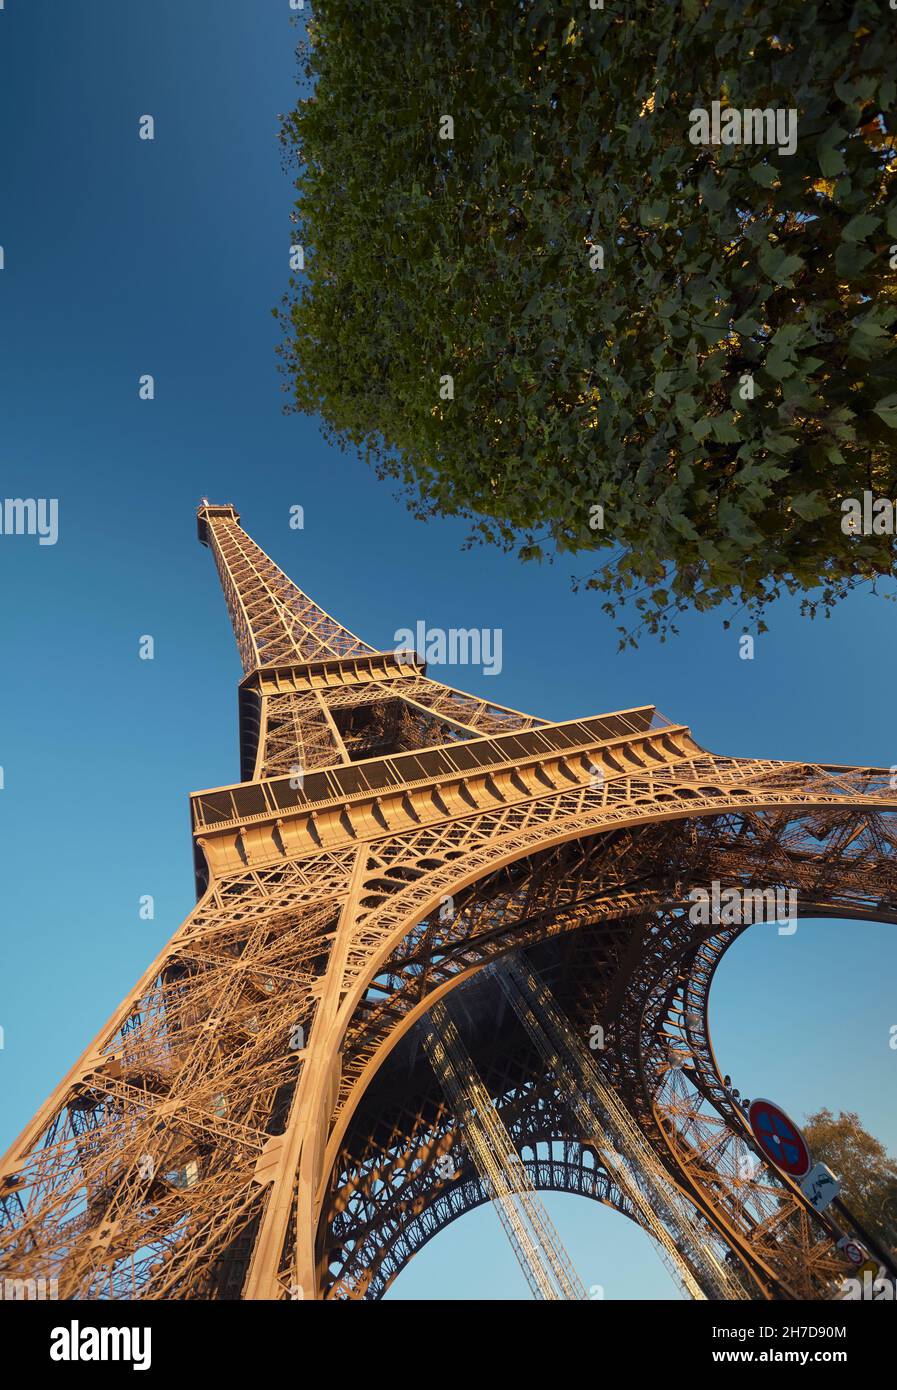 Eiffel tower, Paris Stock Photo